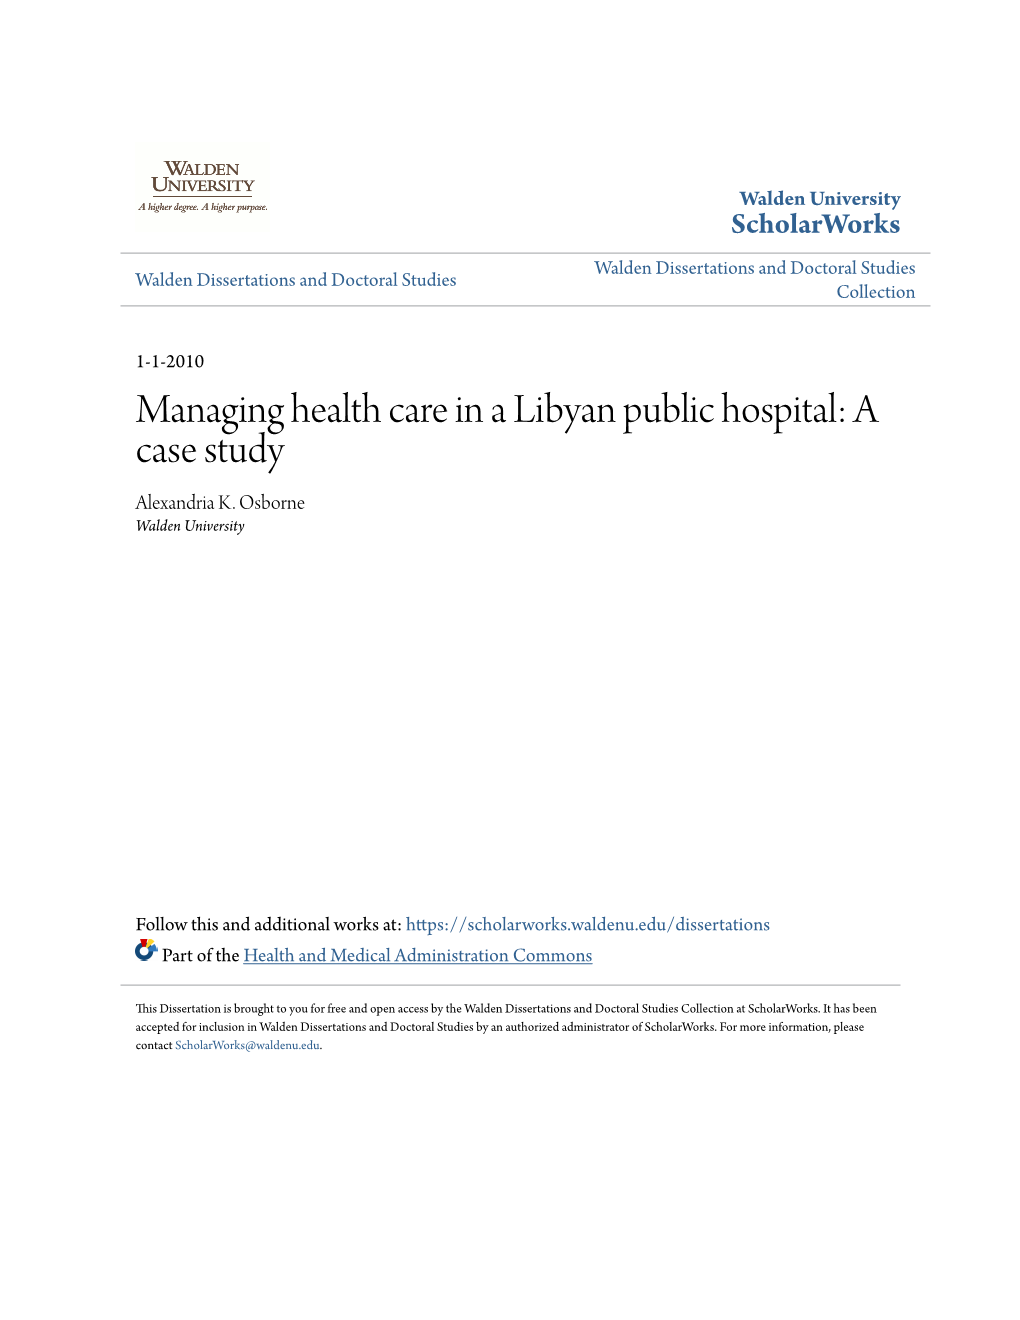 Managing Health Care in a Libyan Public Hospital: a Case Study Alexandria K